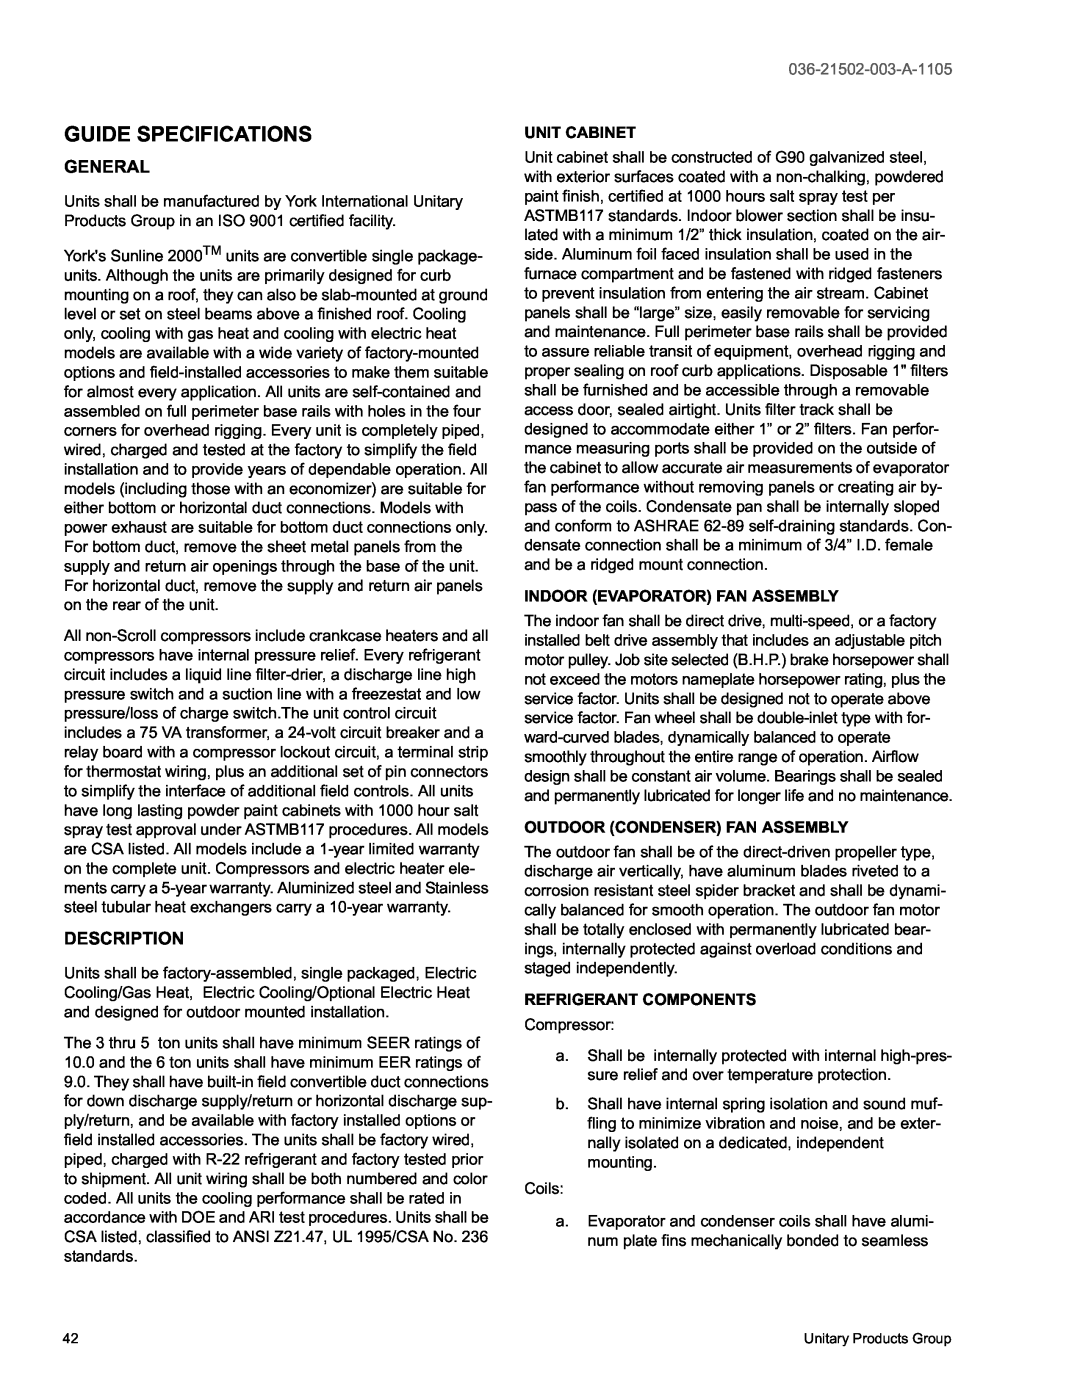 York DM 072 warranty Guide Specifications, General, Description, 036-21502-003-A-1105 